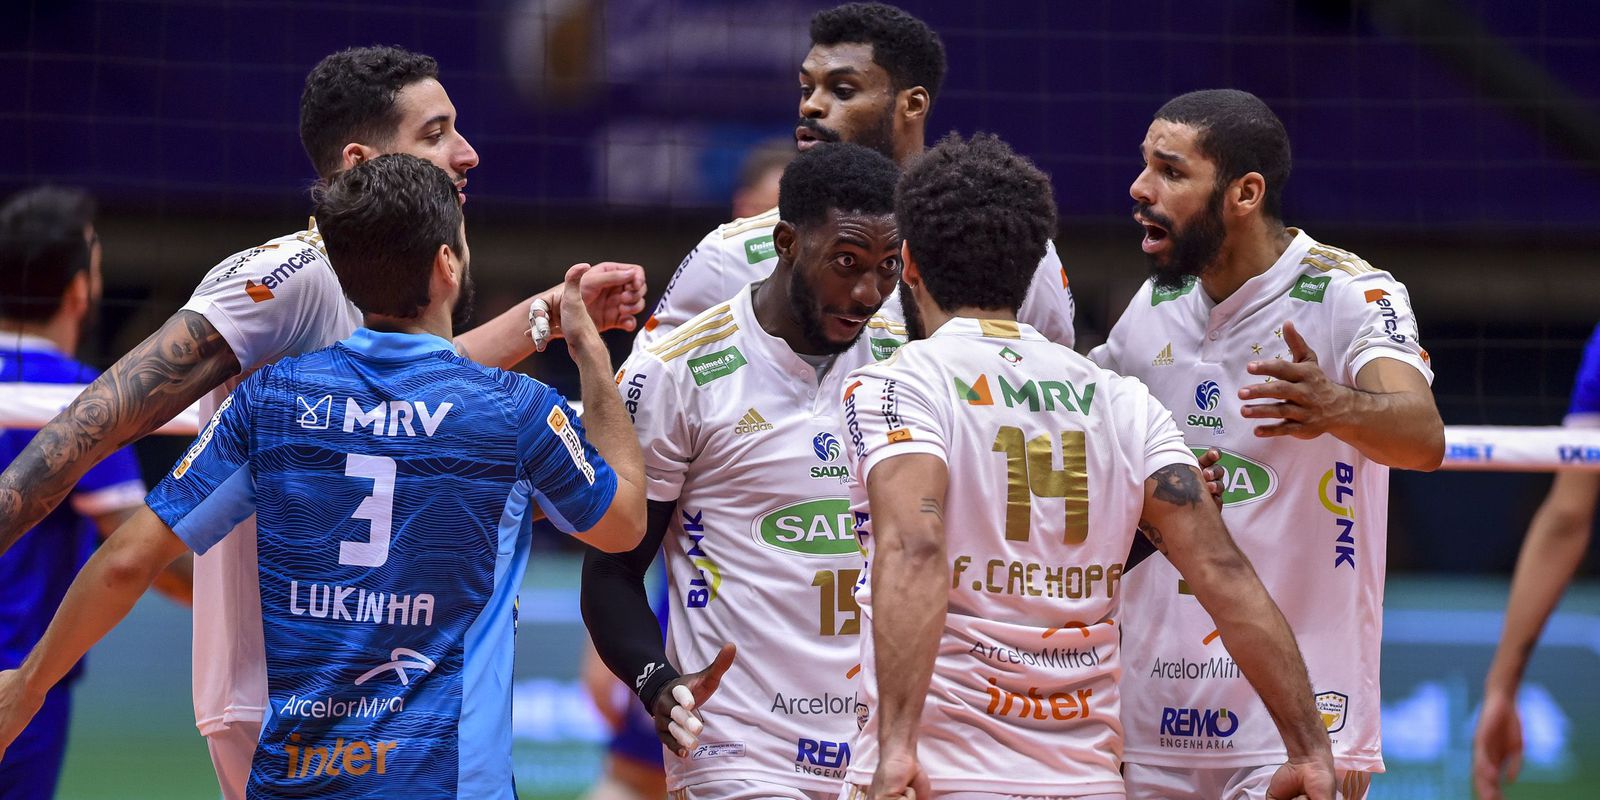 Sada Cruzeiro beats Minas and is champion of the Men's Volleyball Superliga